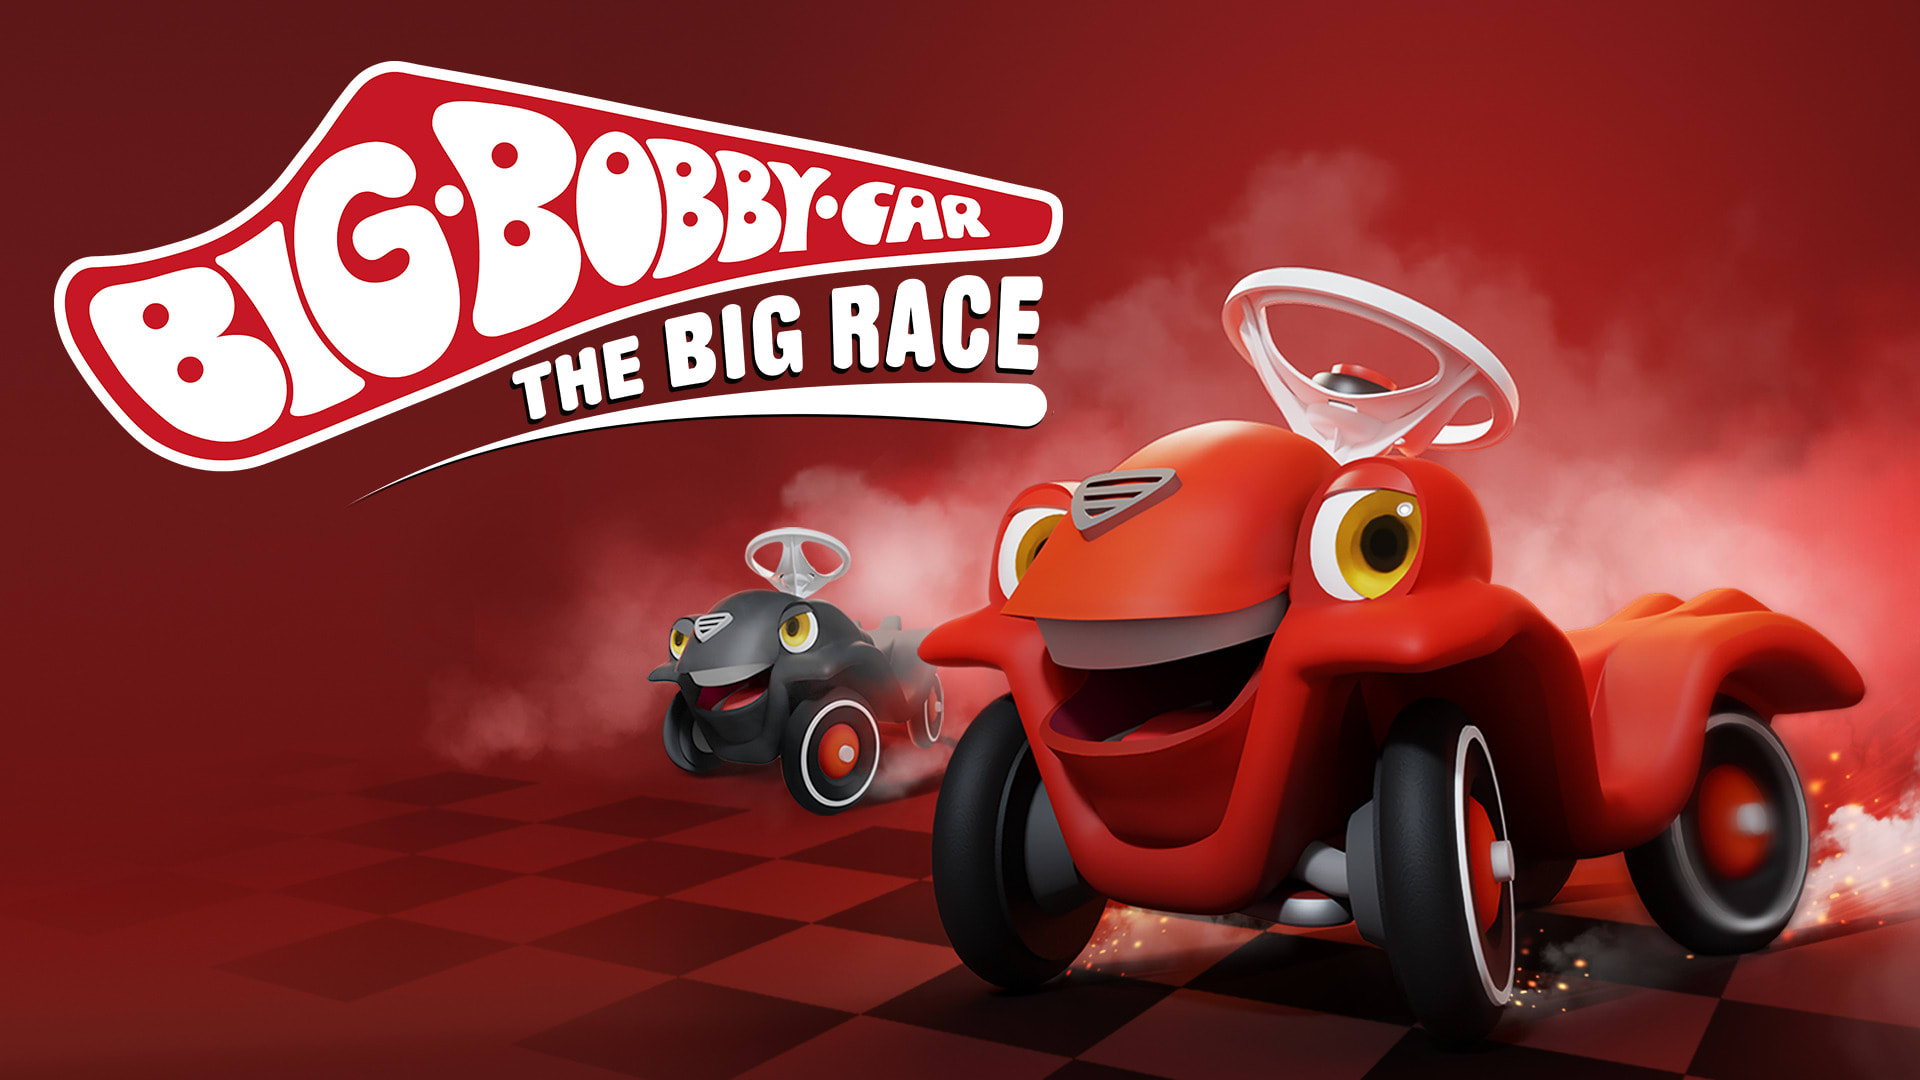 BIG-Bobby-Car - The Big Race 